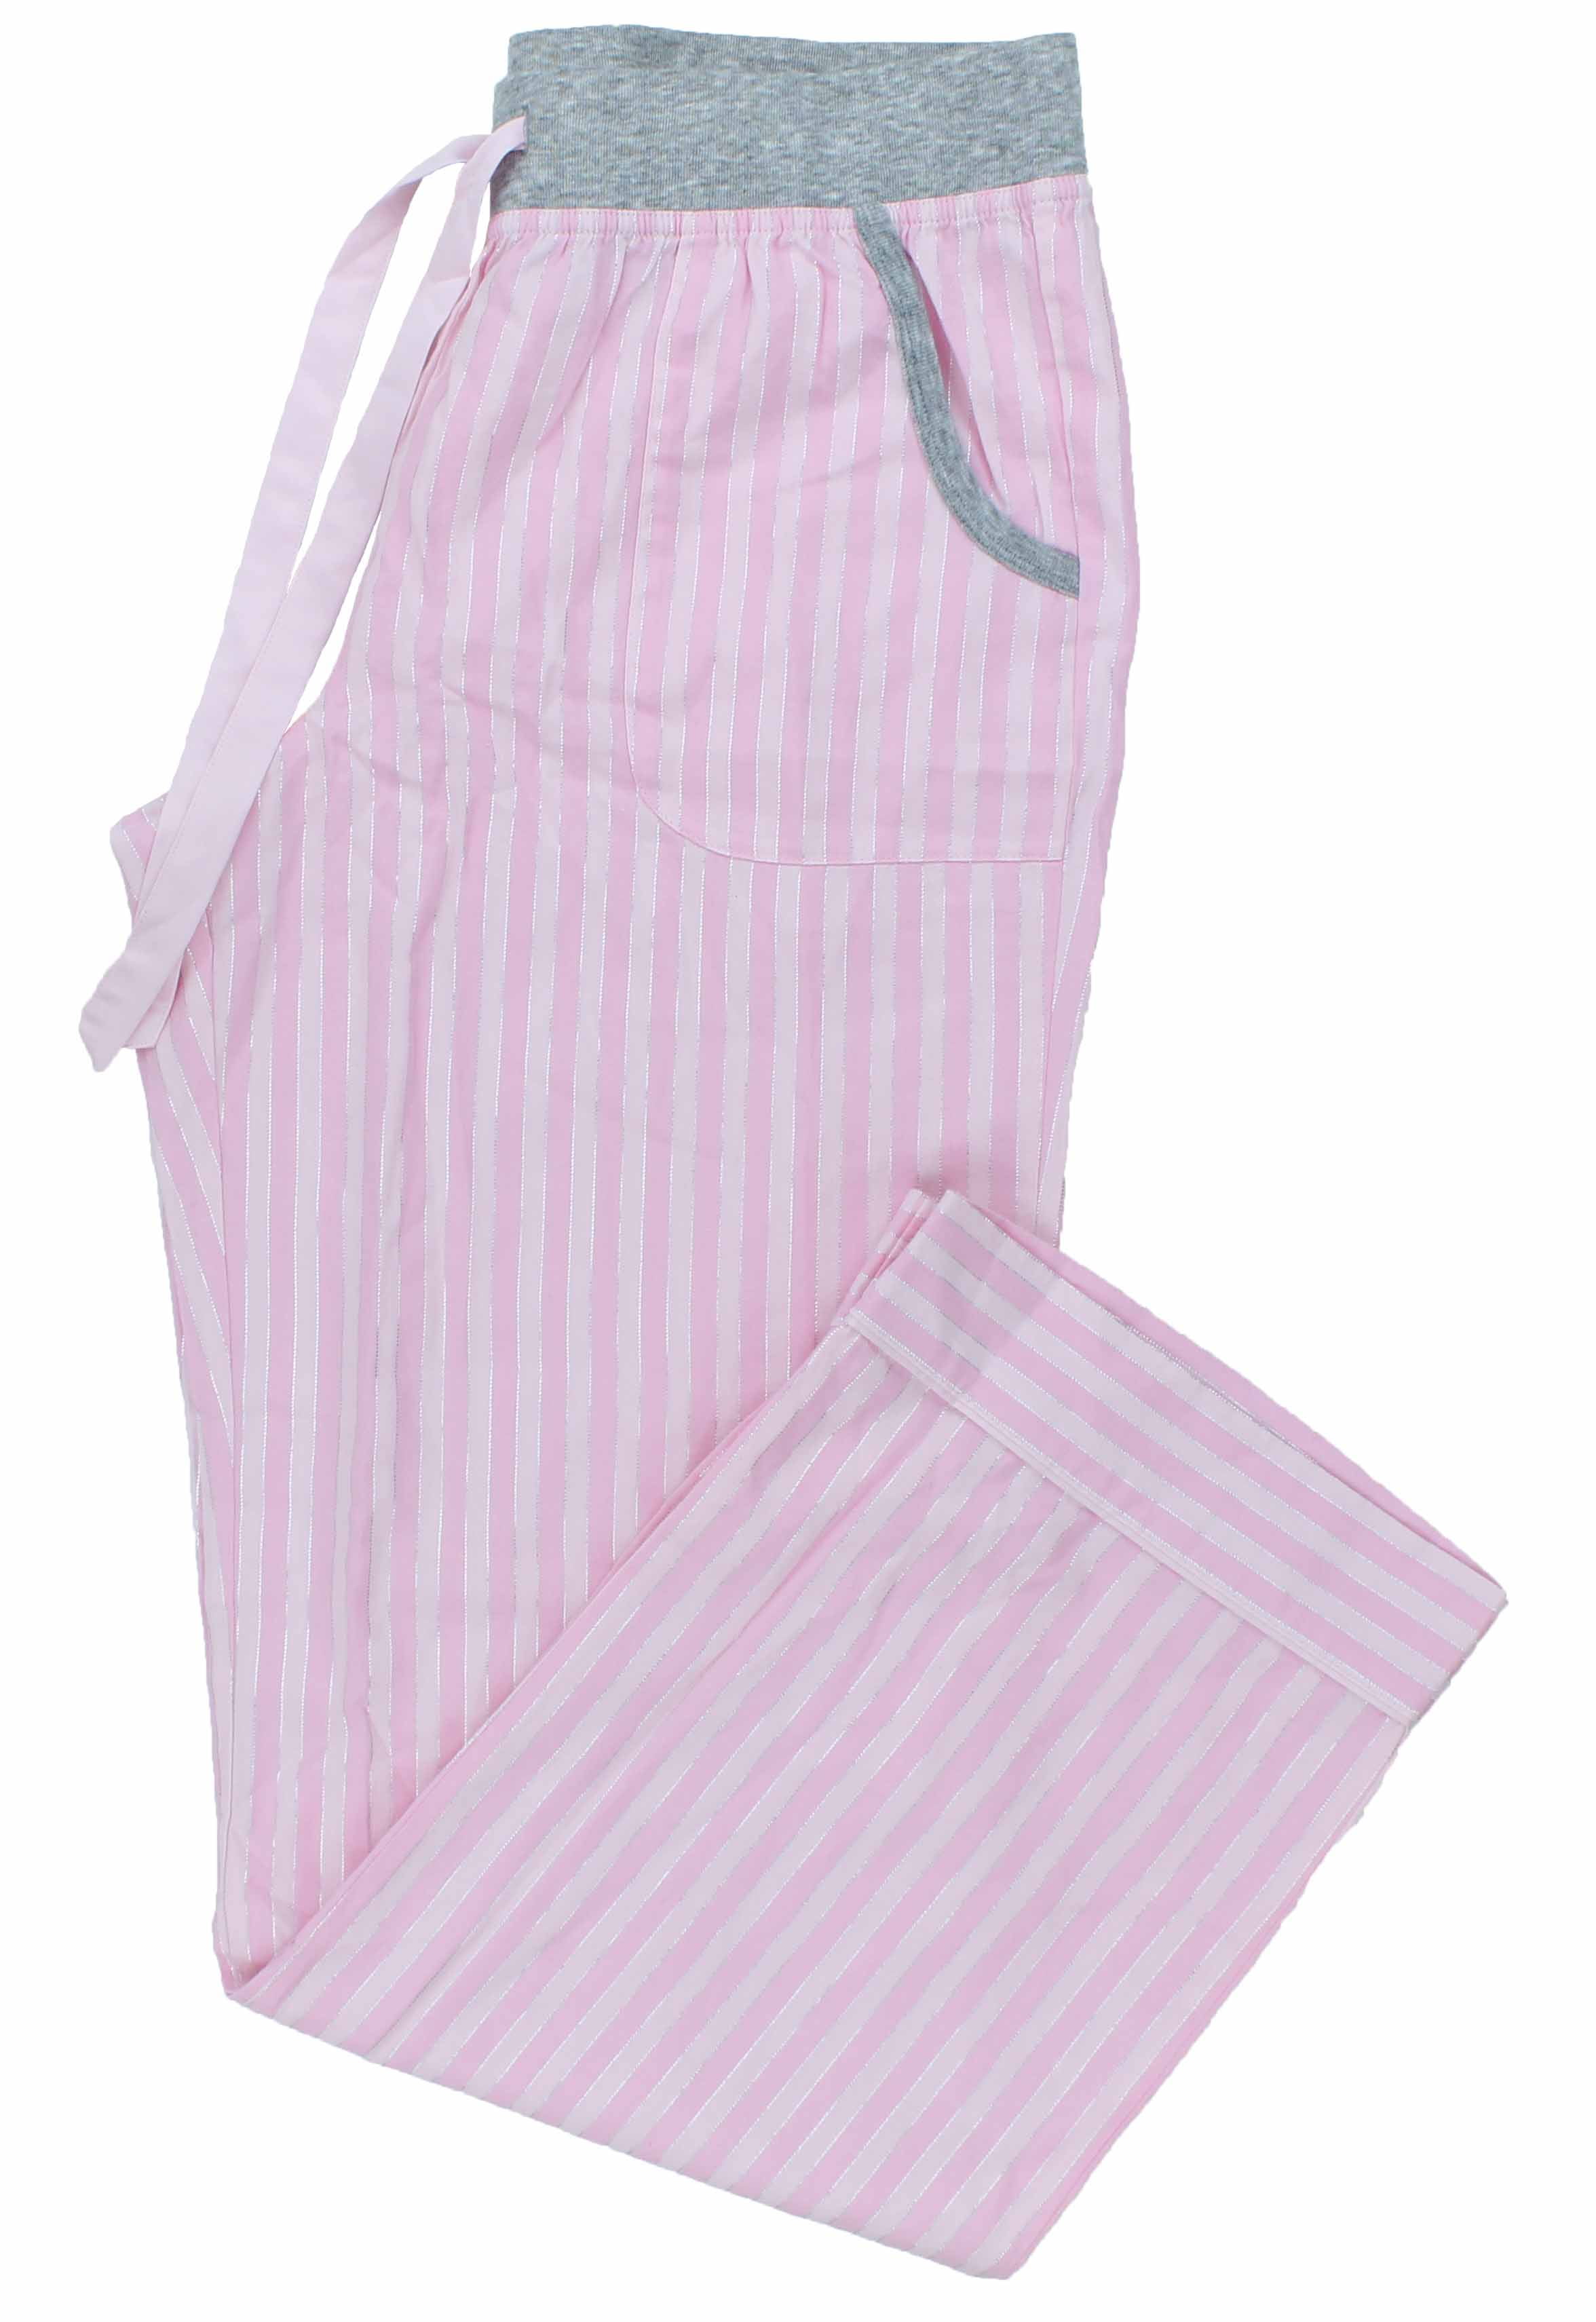 Details about   $60 Victorias Secret Flannel Pajama 2pc Set PINK WHITE STRIPED PANT GRAY TEE M 